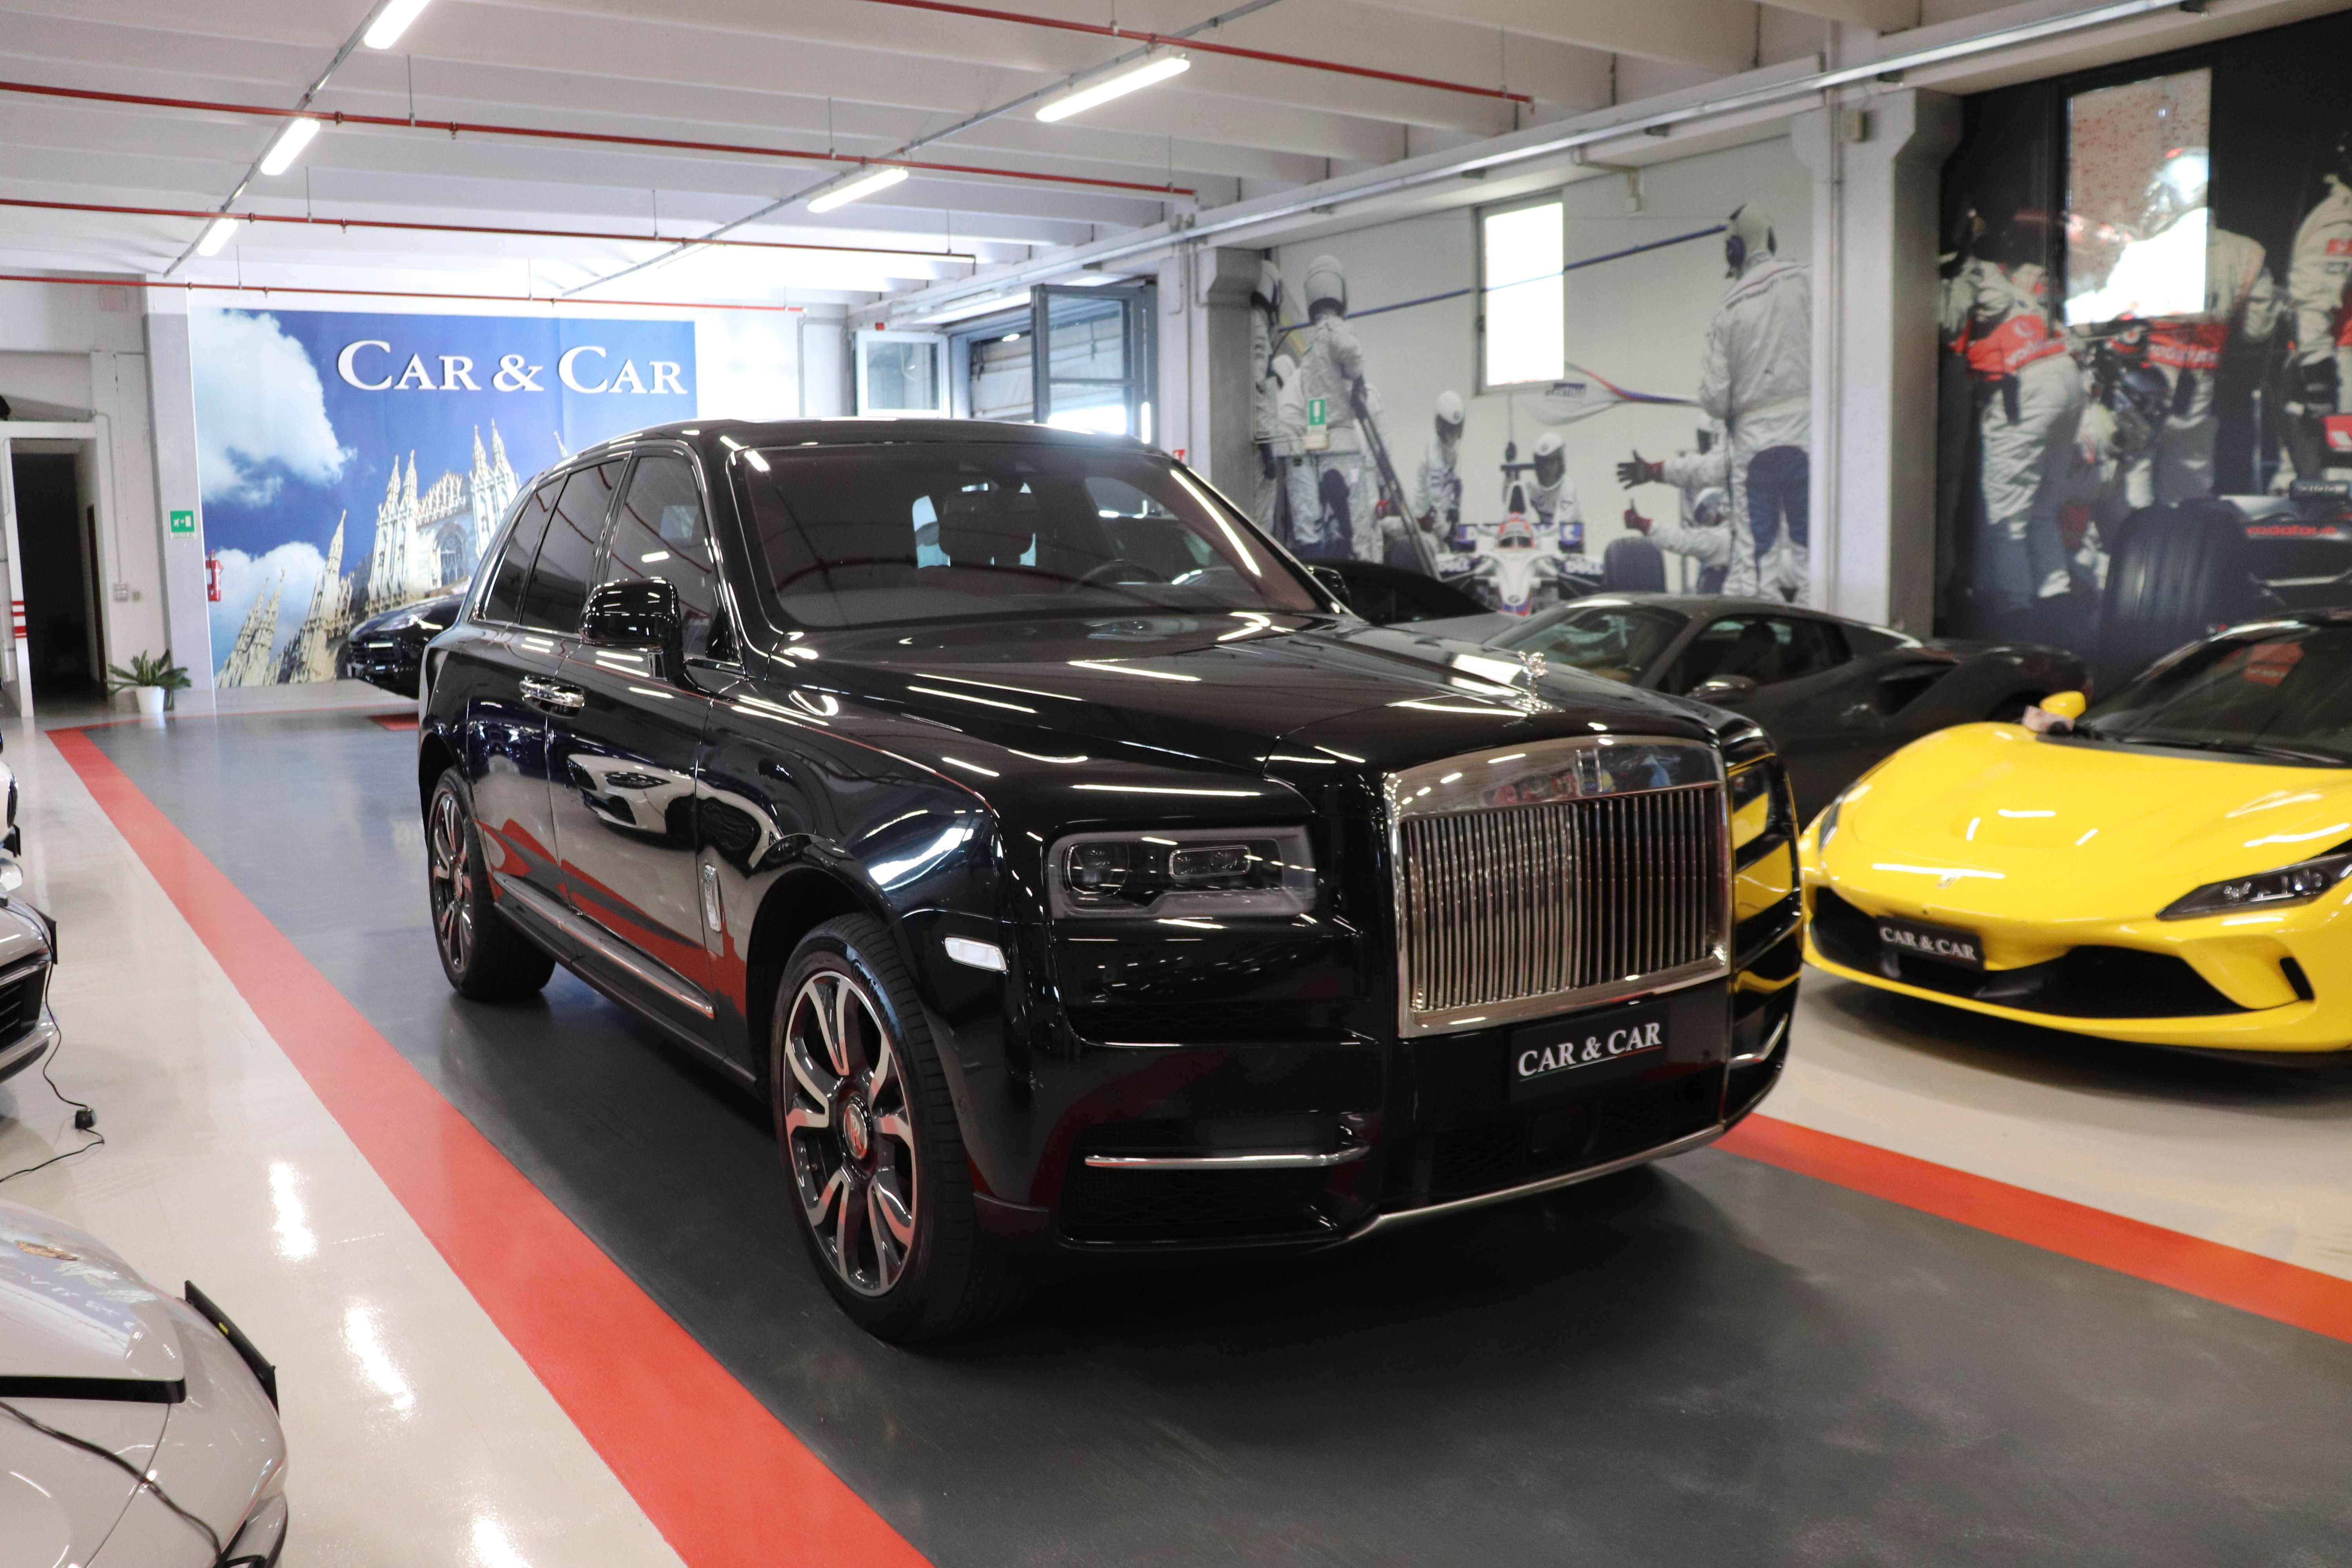 Rolls-Royce Cullinan Off-Road/Pick-up in Black used in Zibido San Giacomo – Milano for € 440,000.-